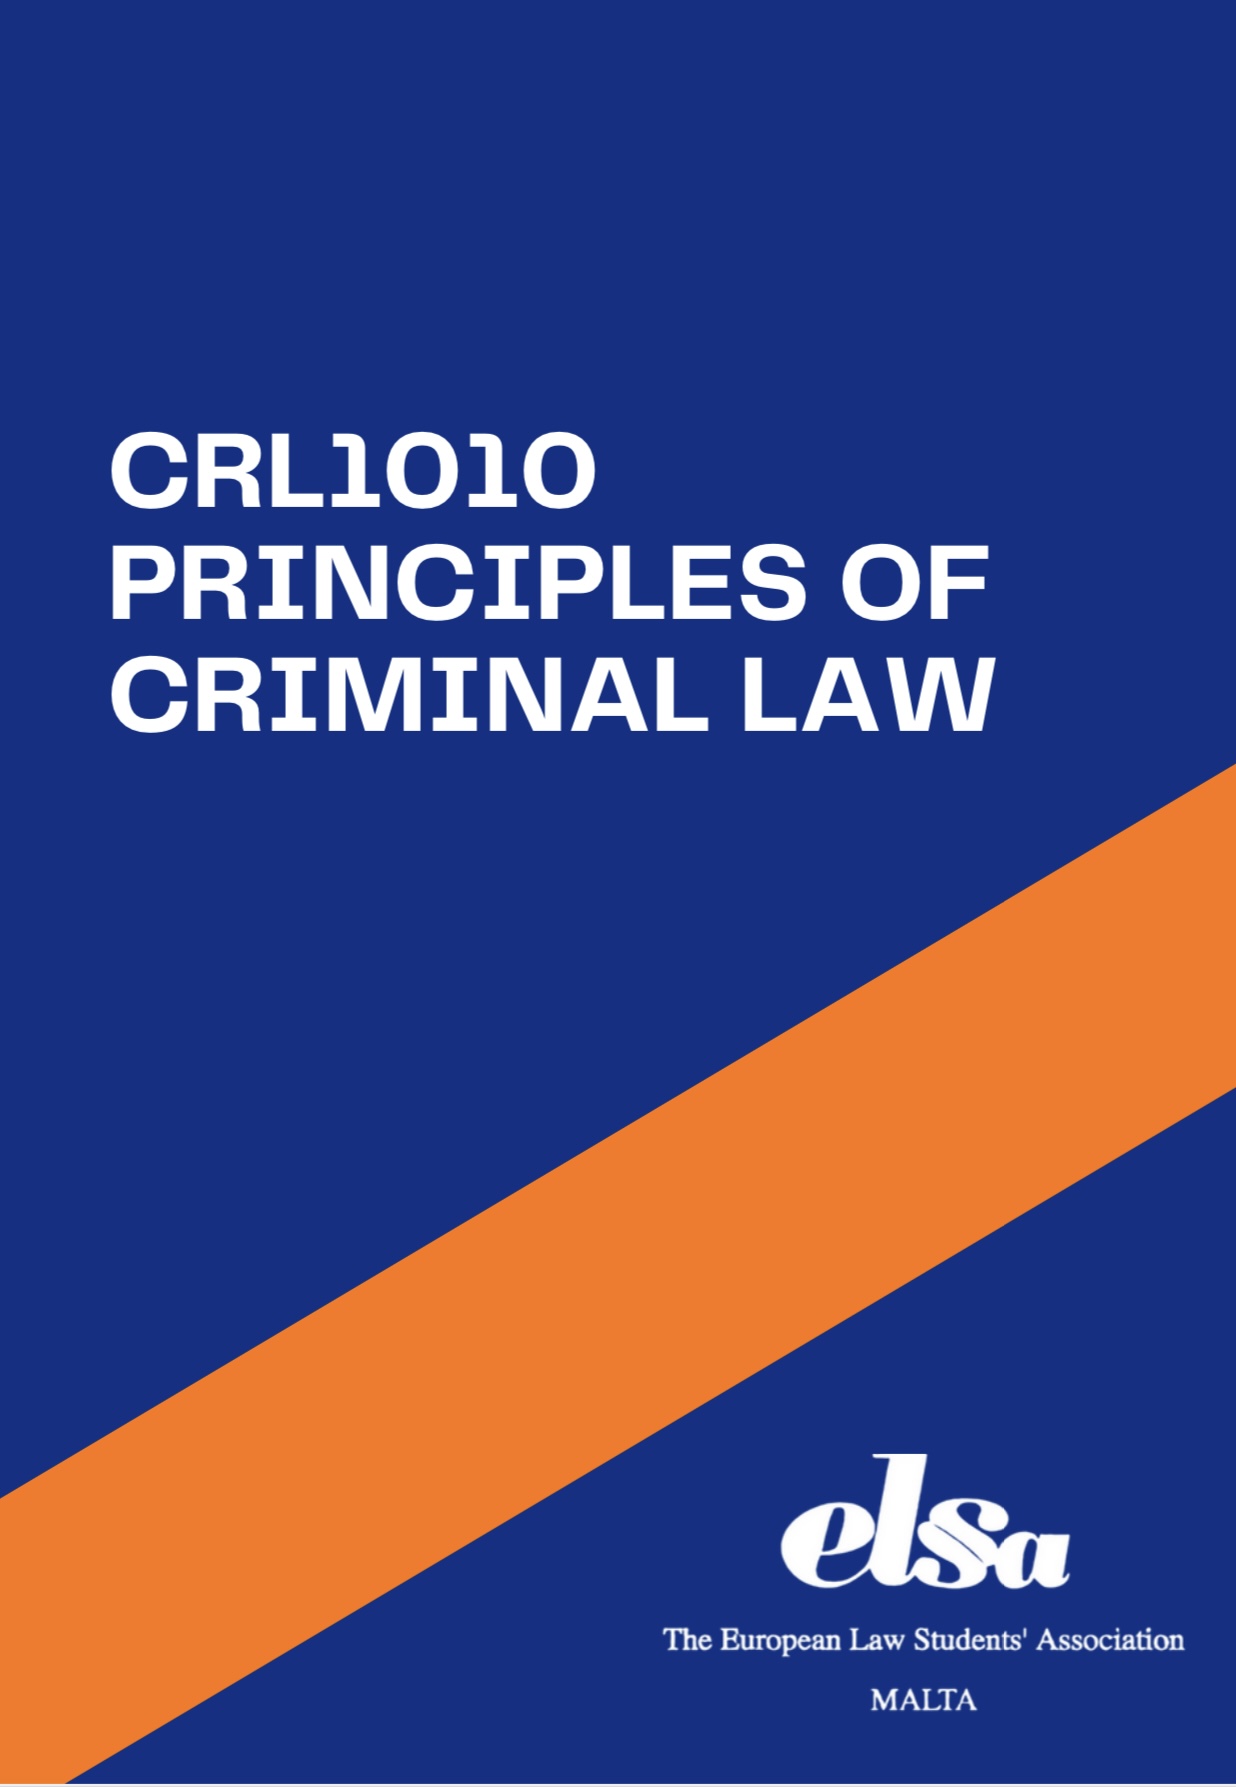 CRL1010 - Principles of Criminal Law